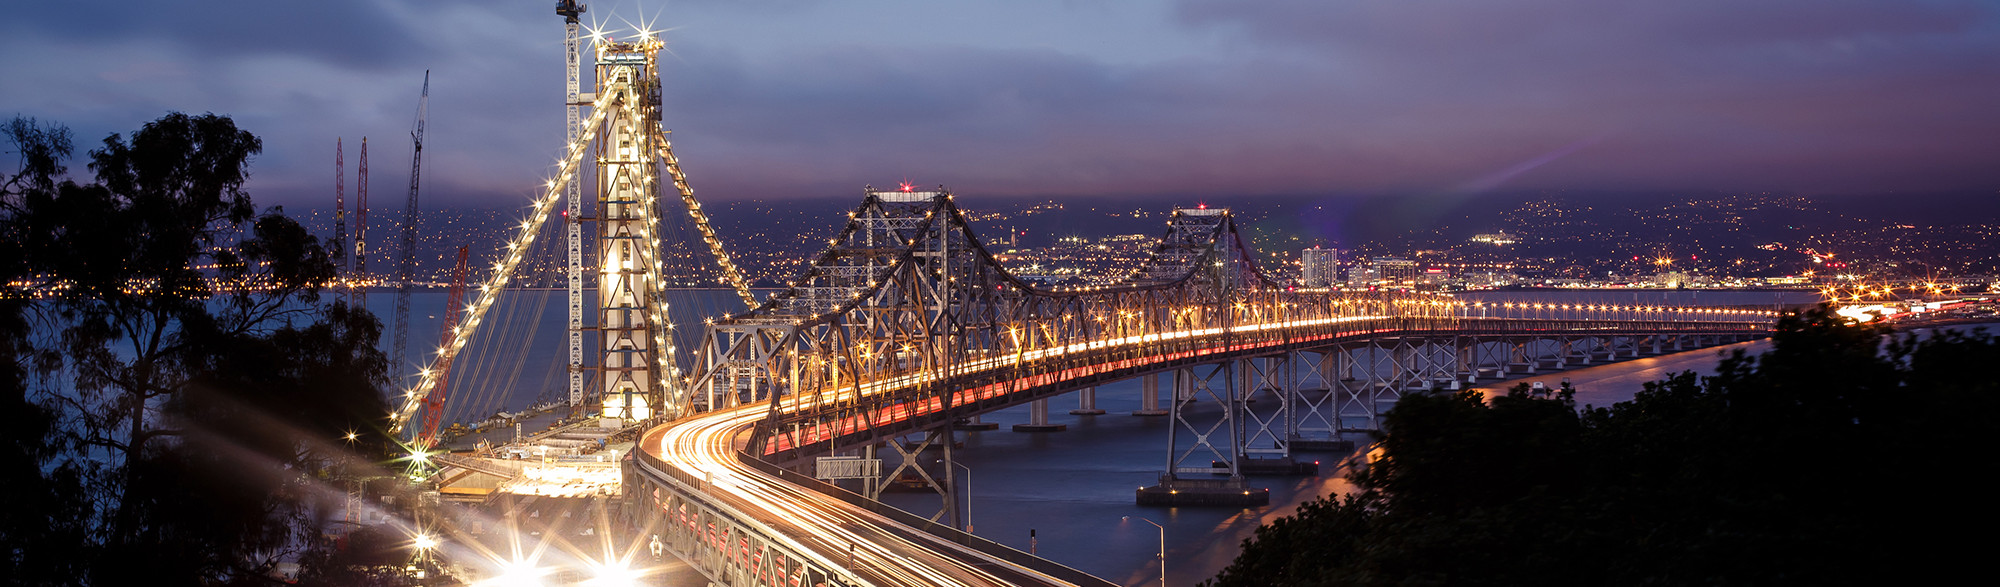 New Bay Bridge of San Francisco